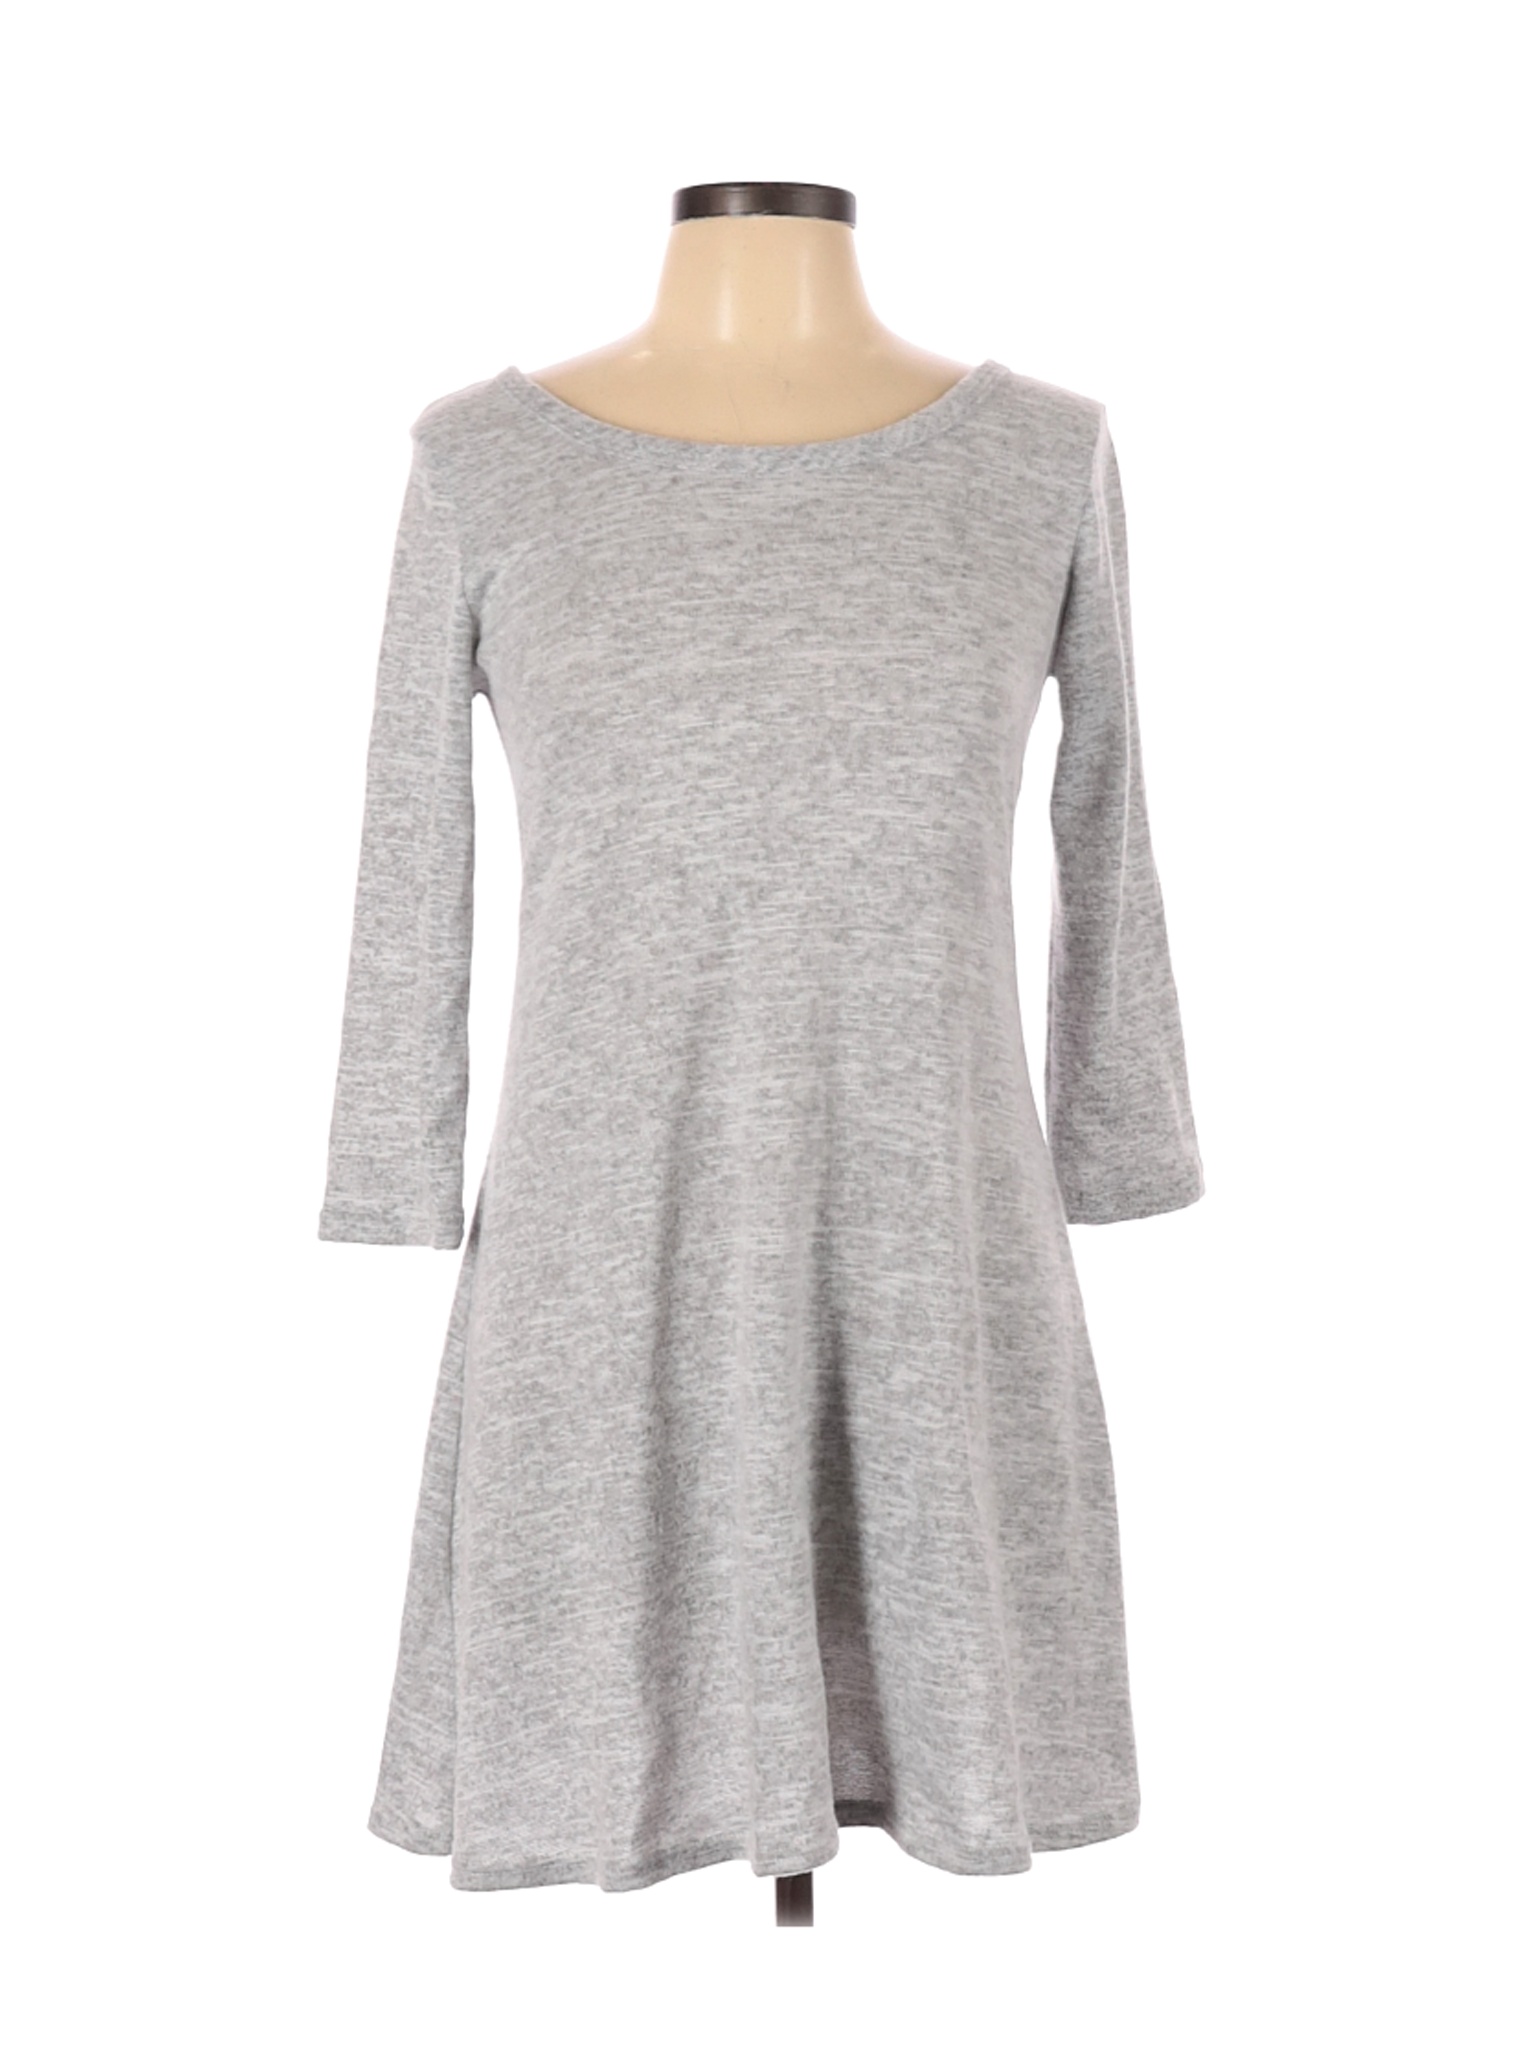 Olivia Rae Women Gray Casual Dress L | eBay